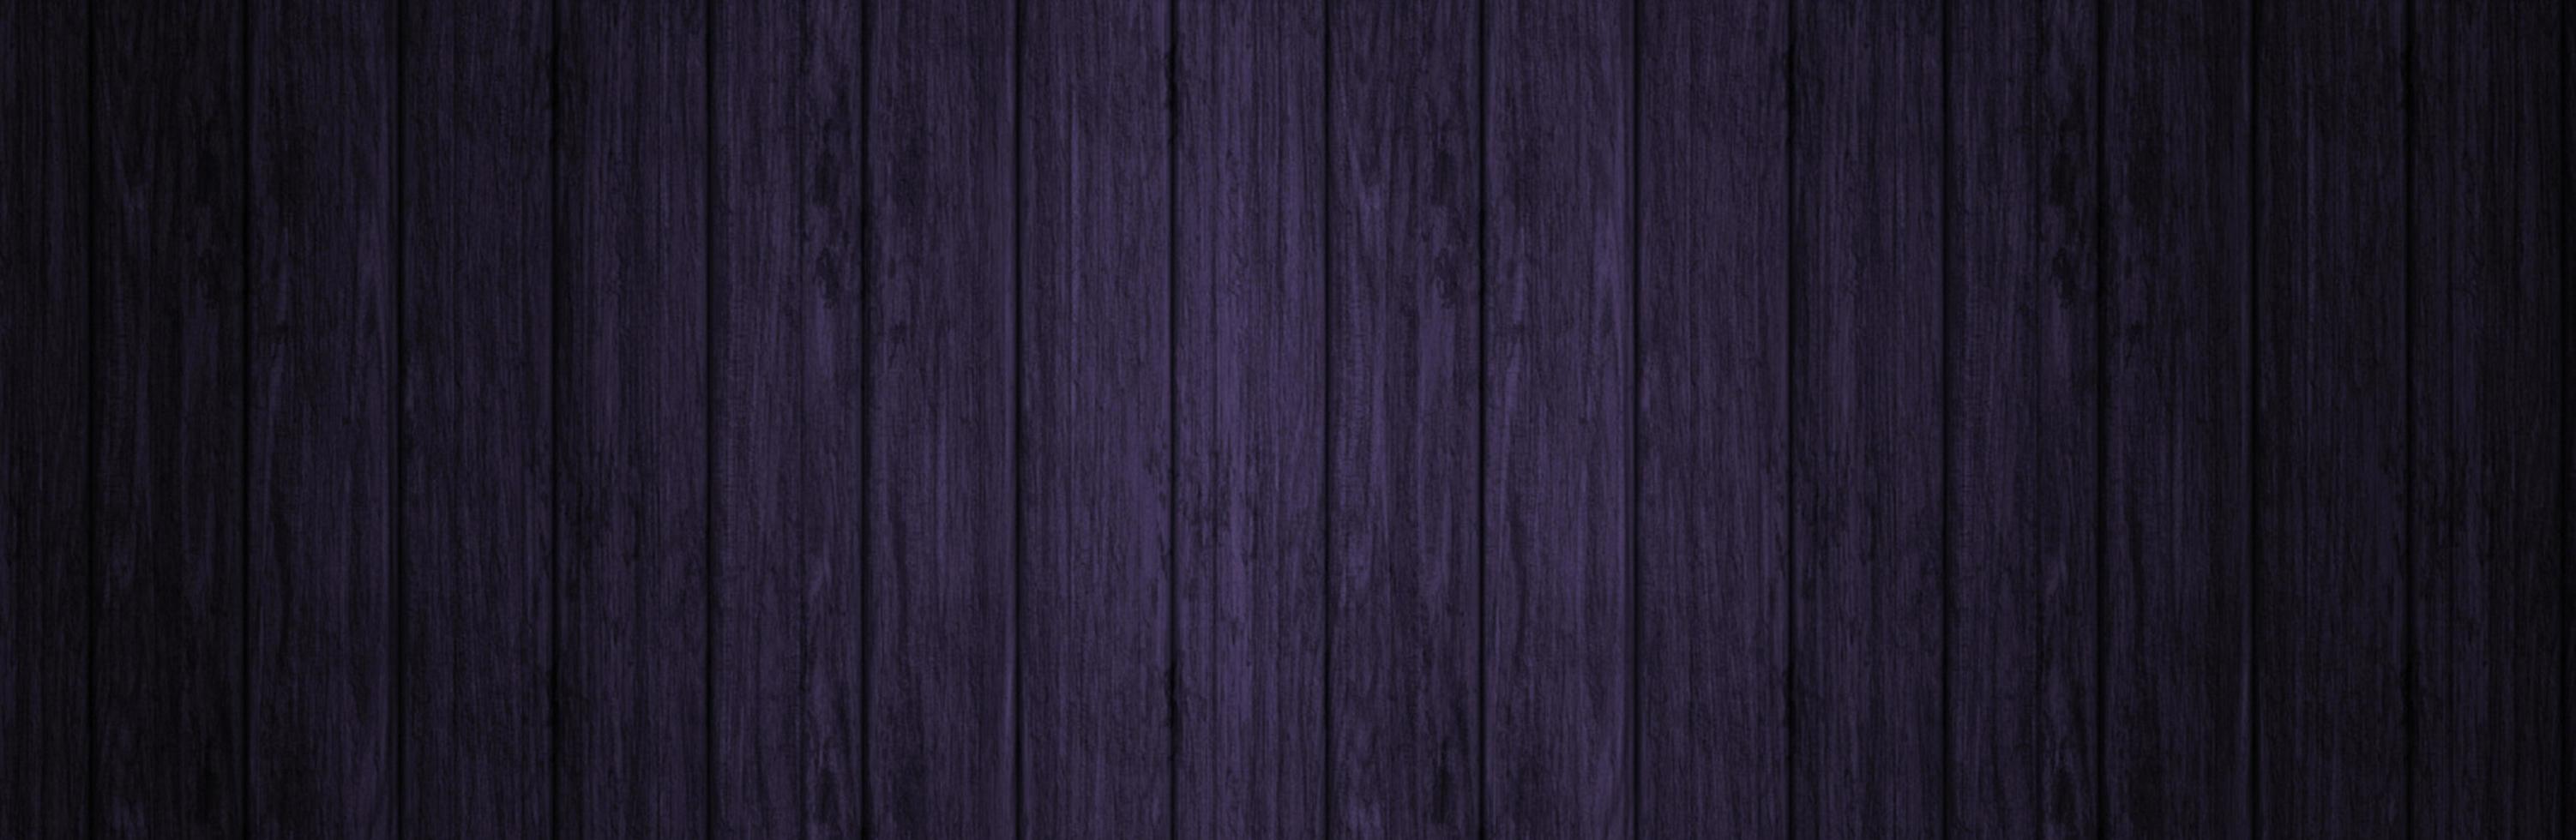 lila Holz Textur Hintergrund foto